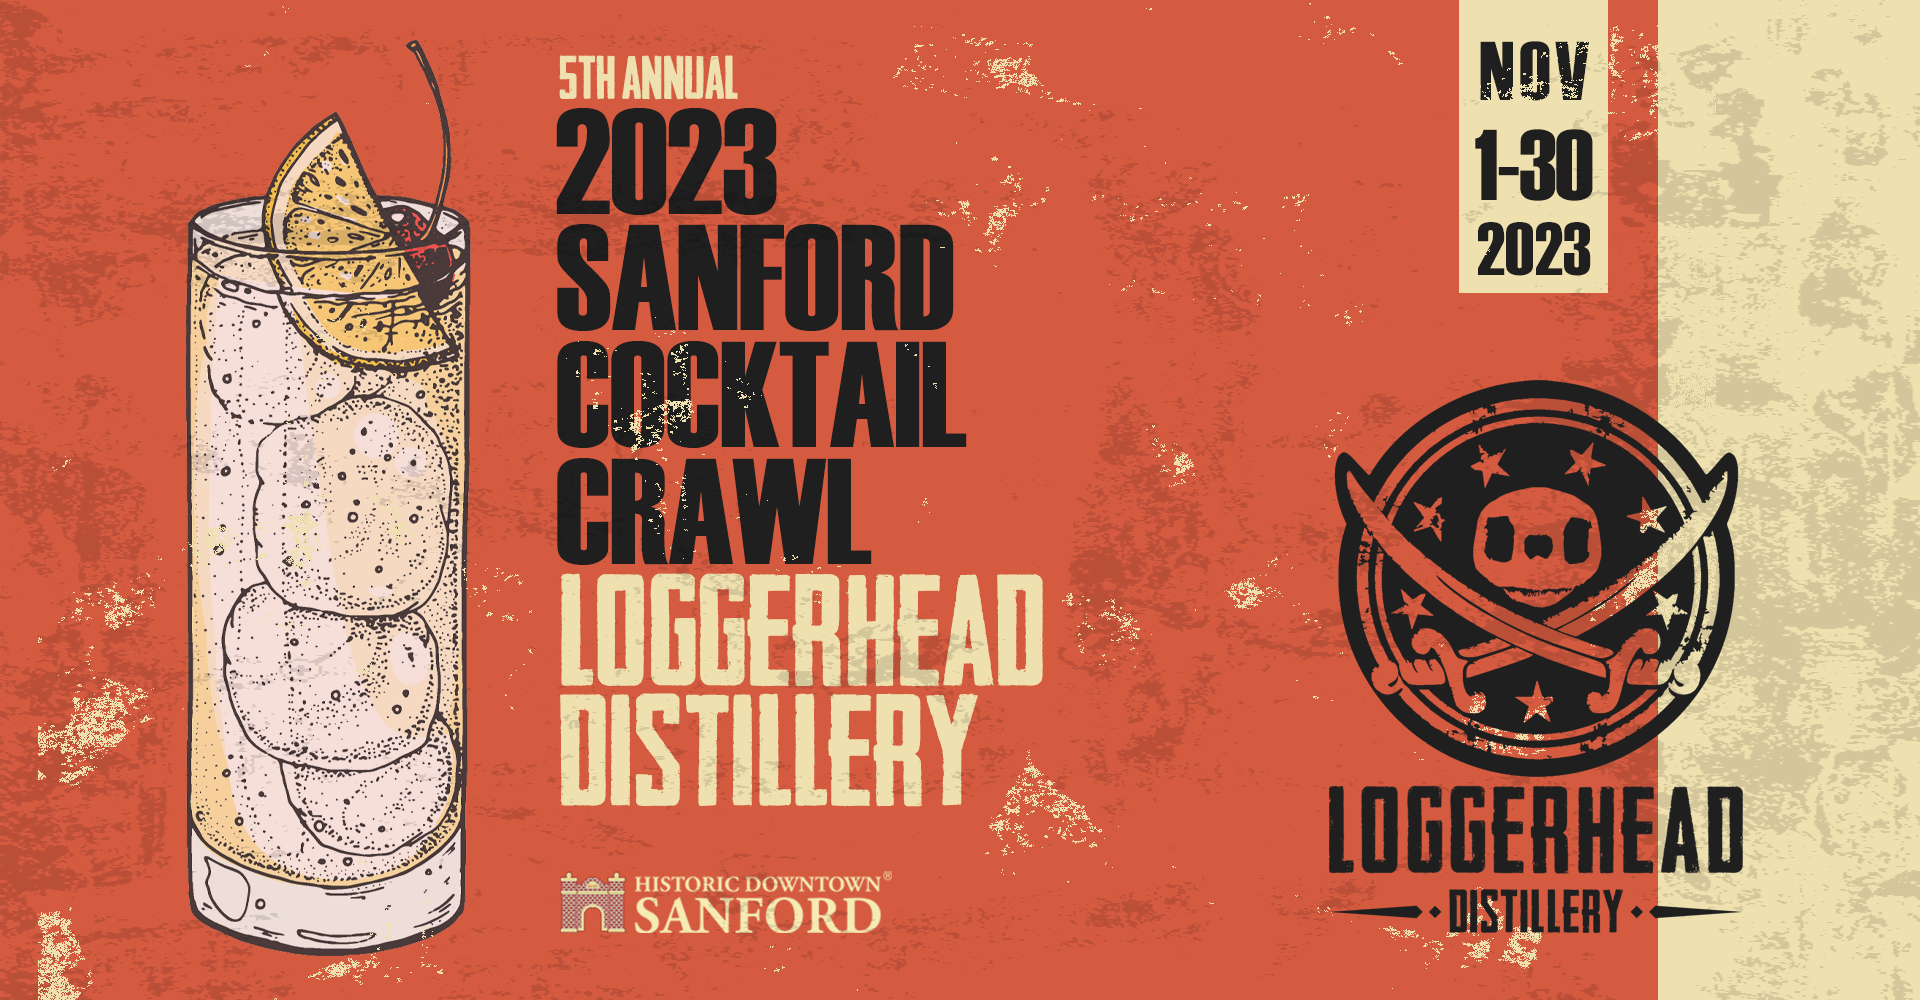 5th Annual LOGGERHEAD DISTILLERY COCKTAIL CRAWL